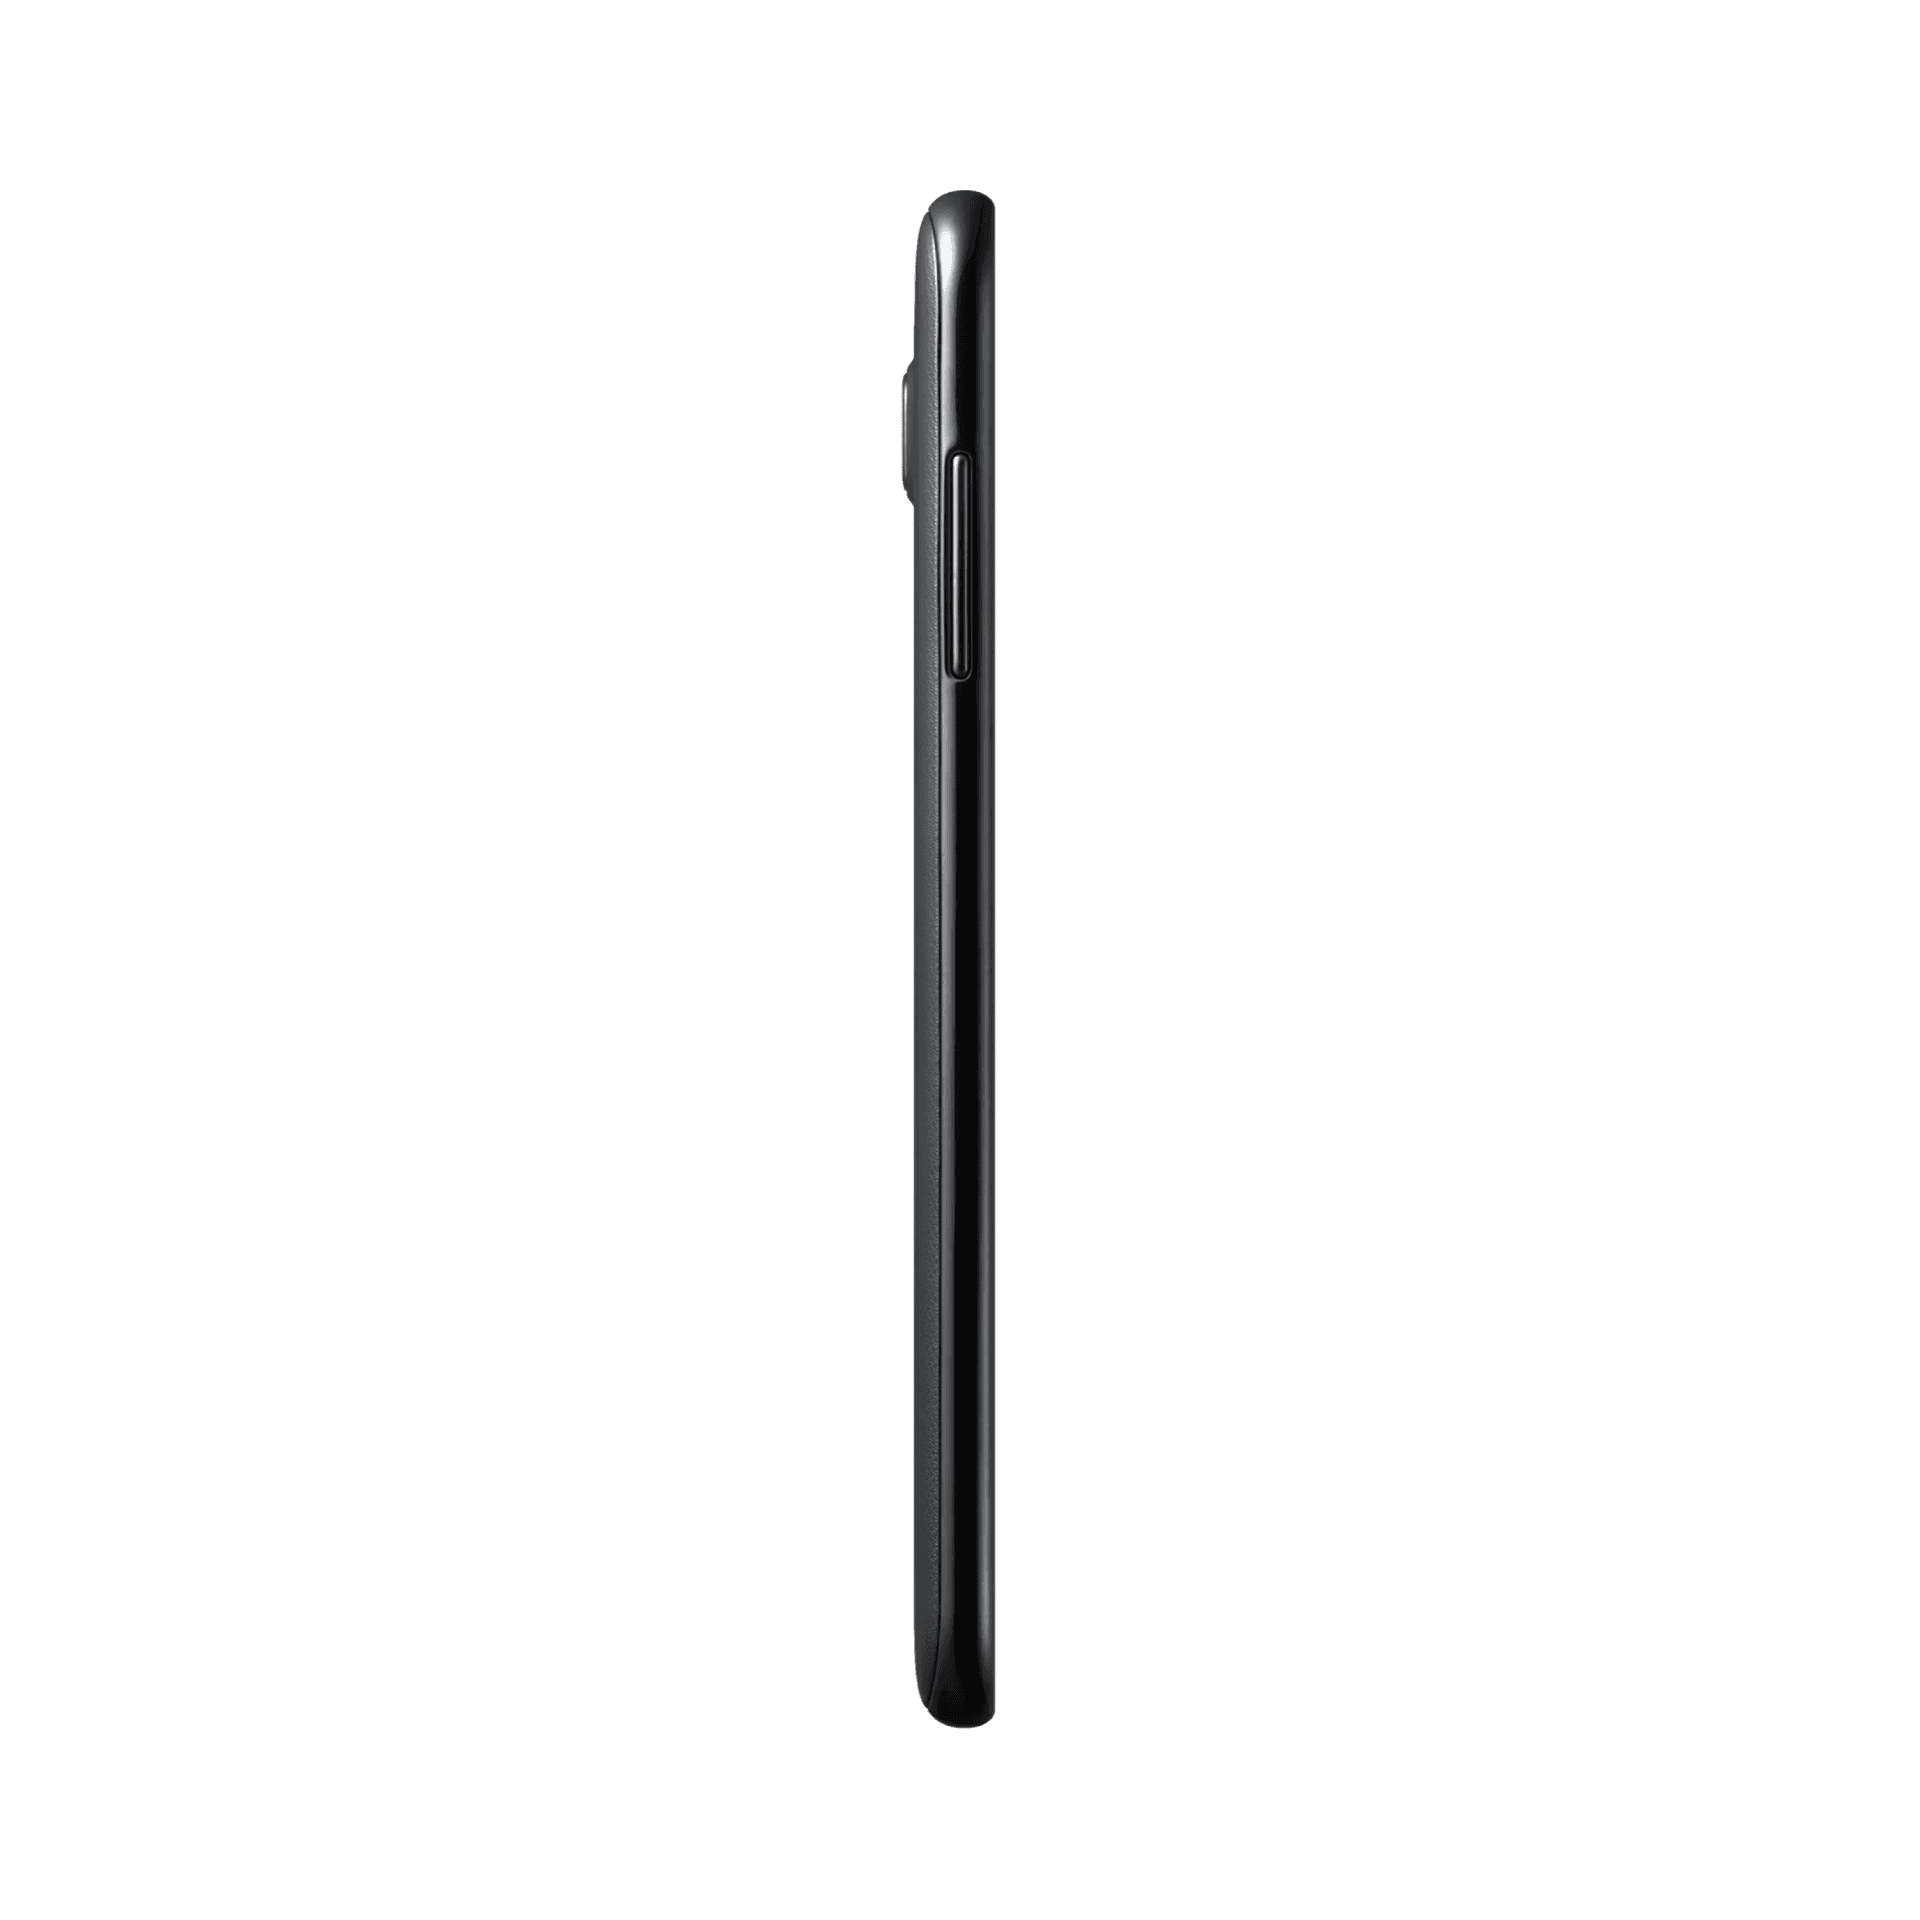 Samsung Galaxy J7 CORE - 16 GB - Siyah